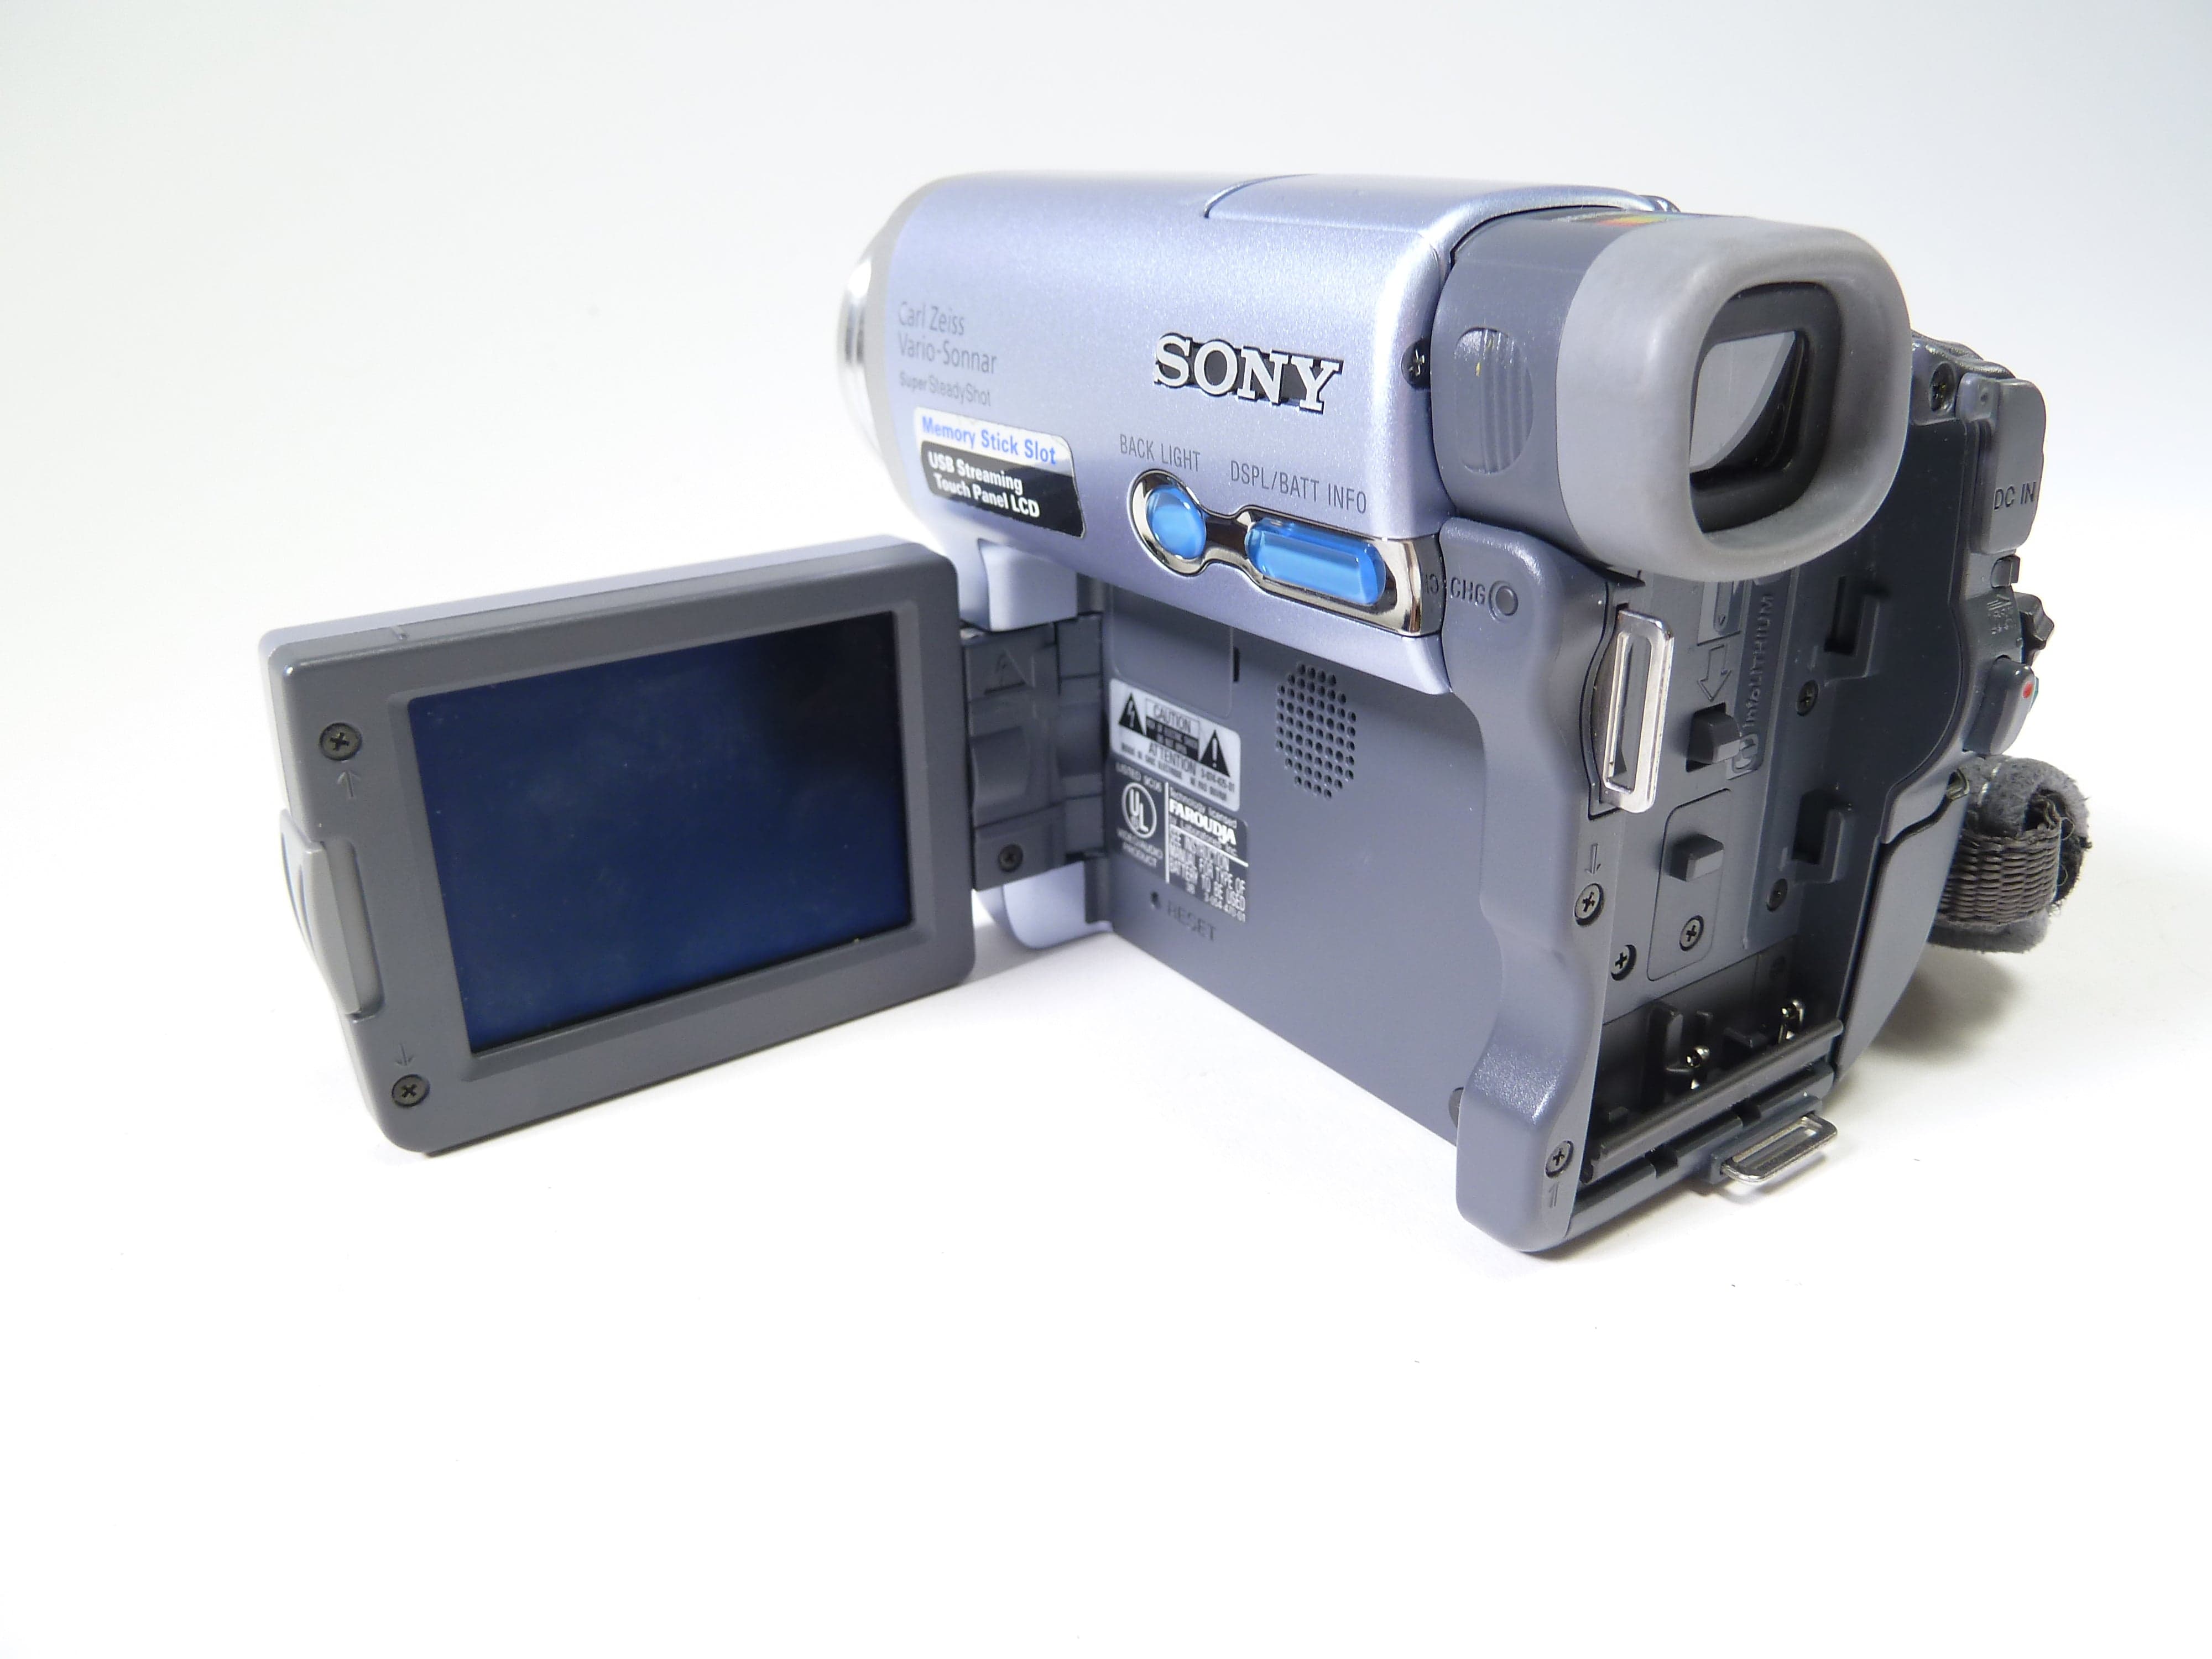 Sony DCR-TRV22 Carl Zeiss Vario-Sonnar Mini DV Camcorder – Camera